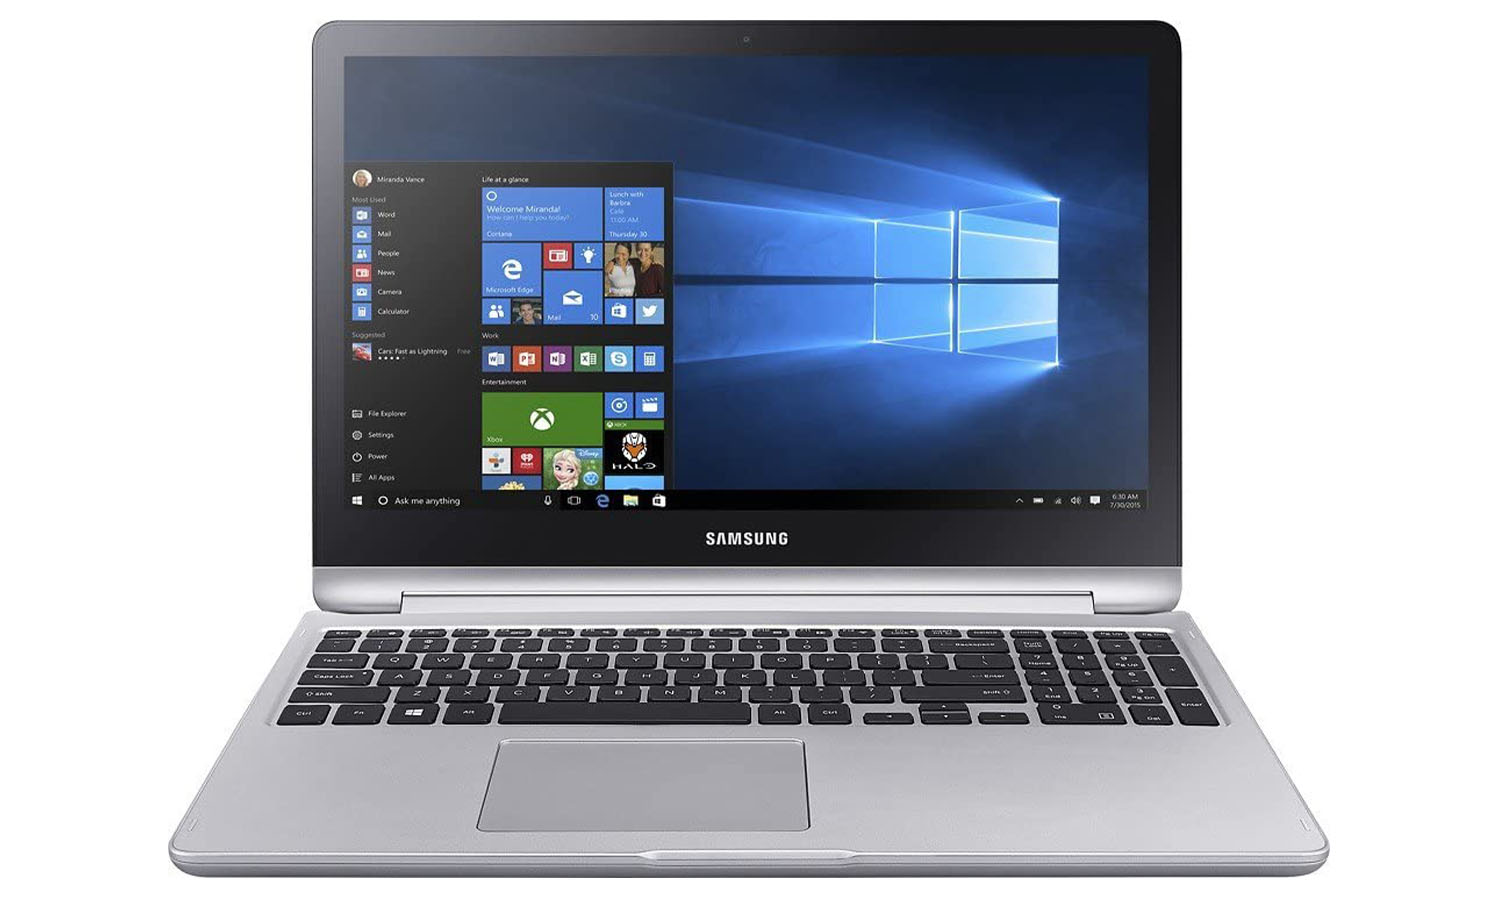 Samsung Notebook Spin 7 Intel Core i7 7th Gen 12GB RAM 1000GB HDD Windows 10 Home Nvidia Geforce 940MX